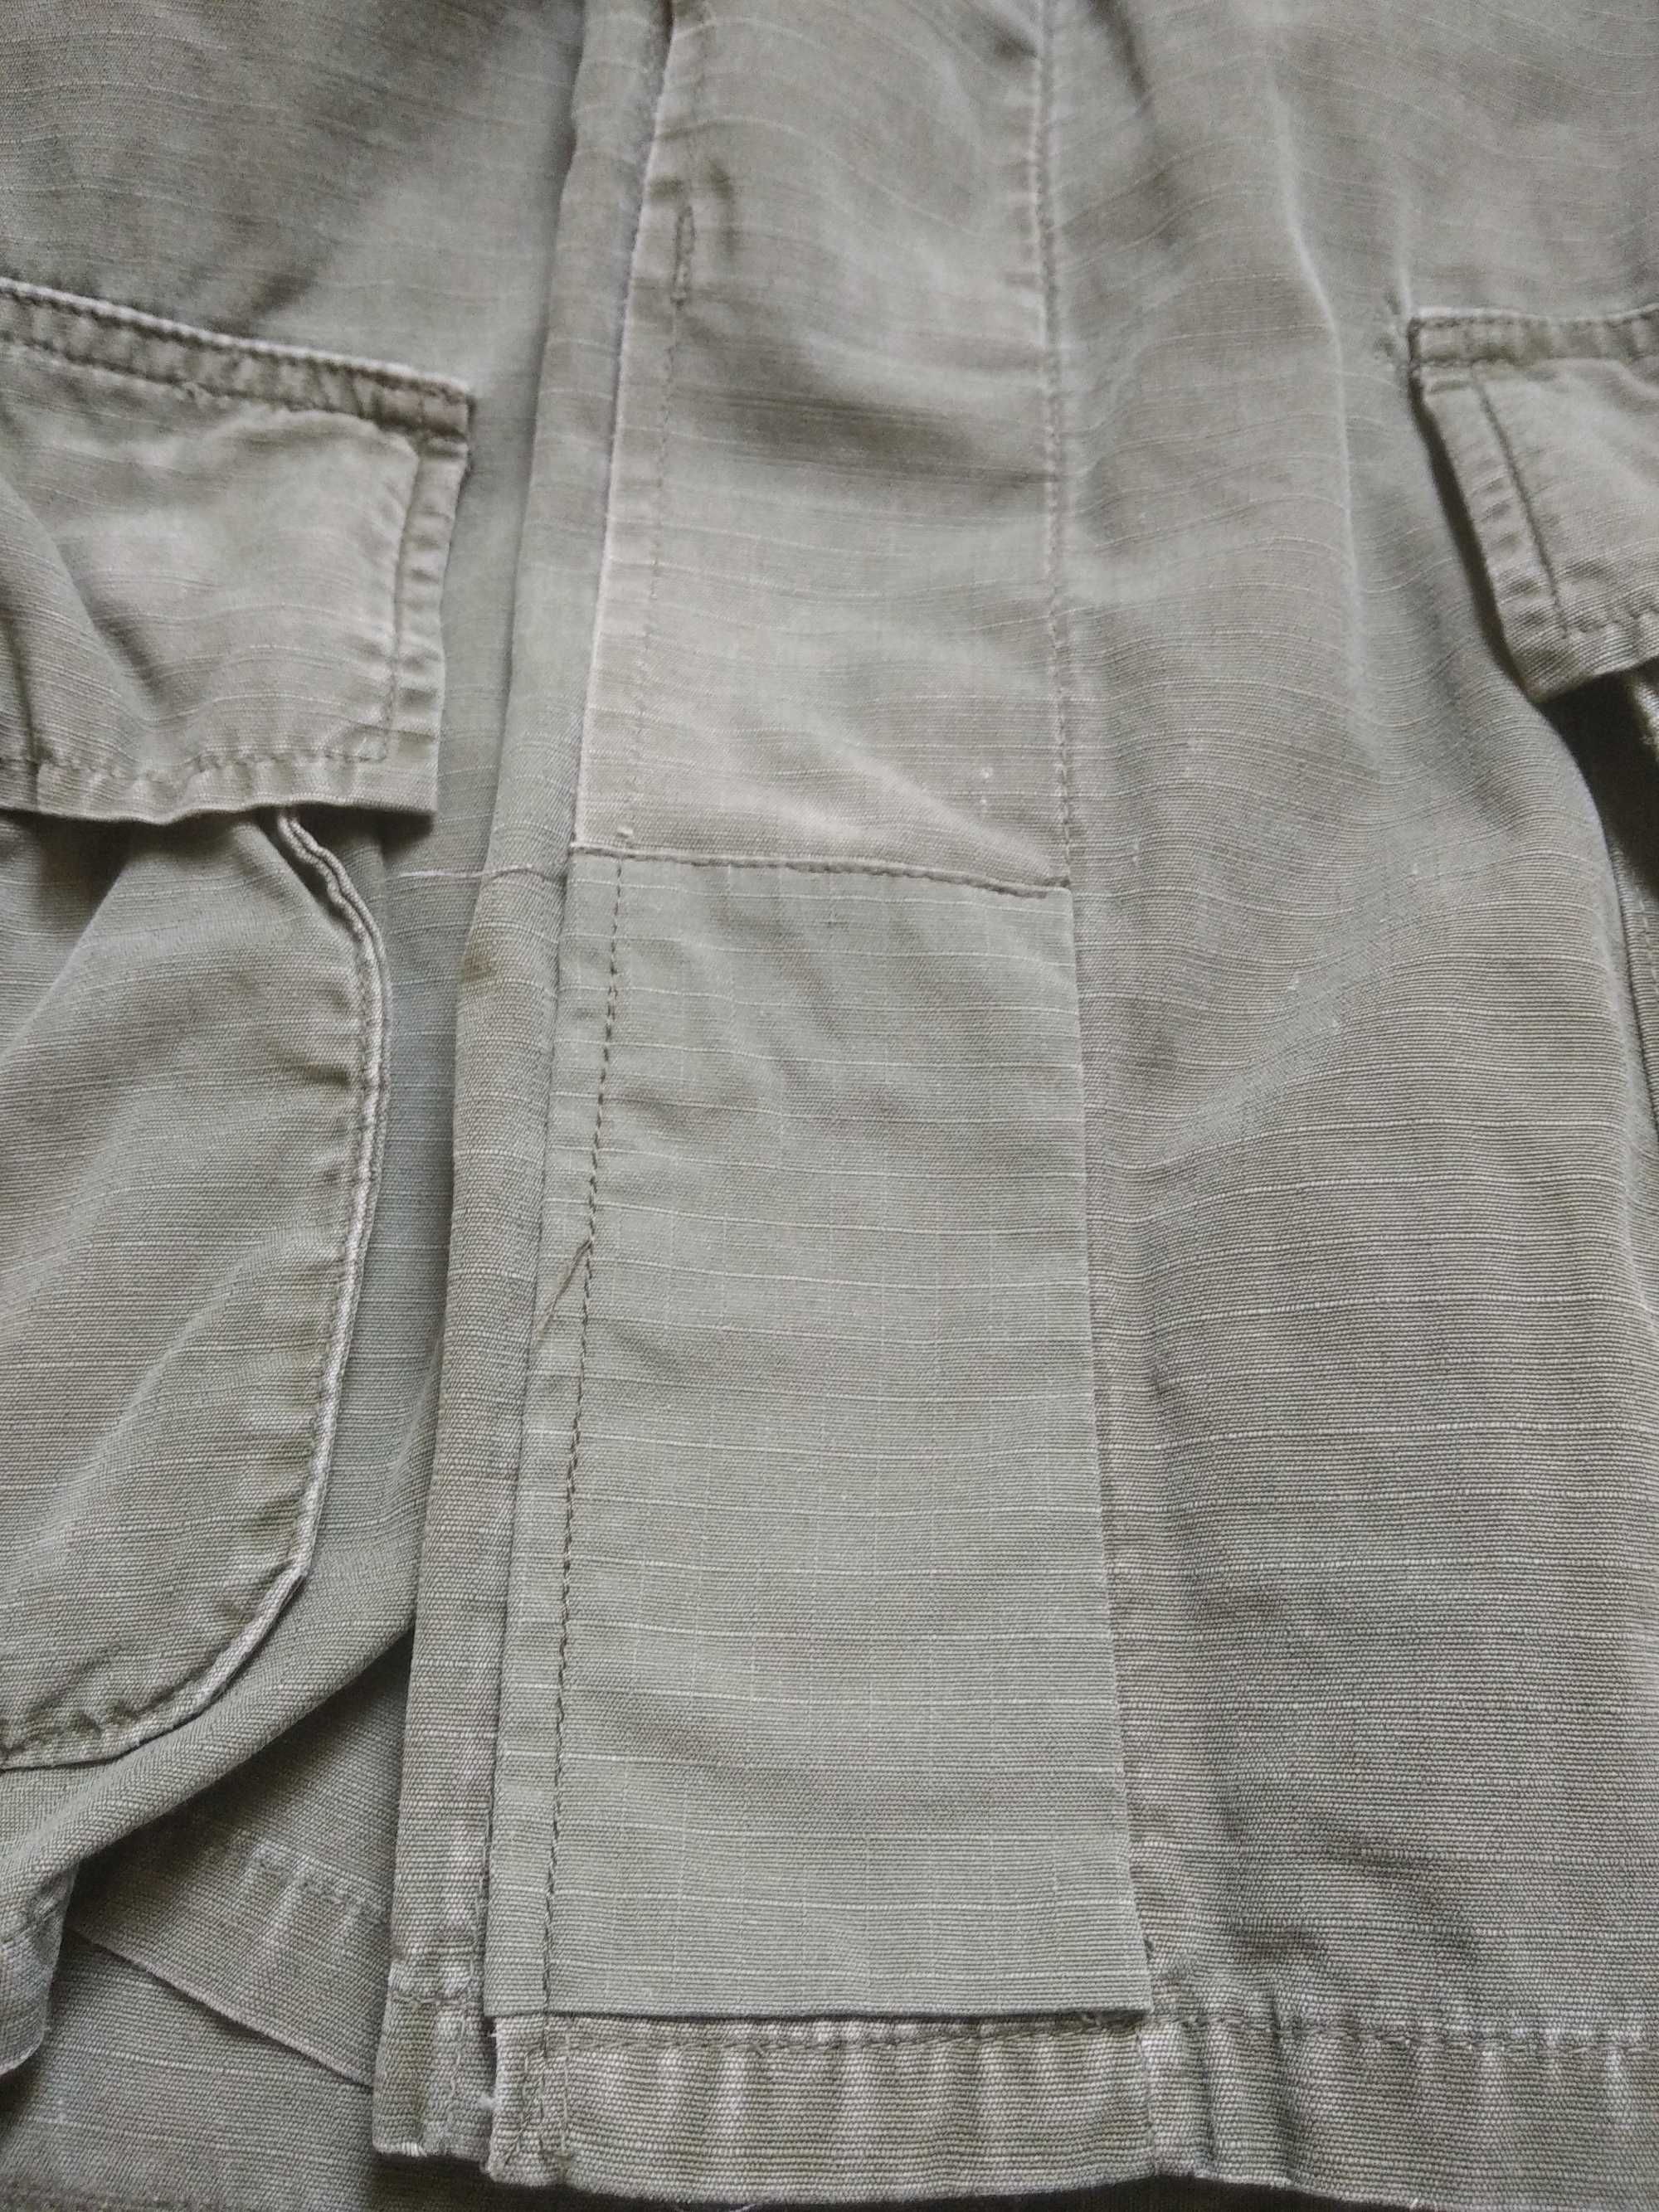 Mundur TCU Medium Regular, bluza + spodnie, Nam era